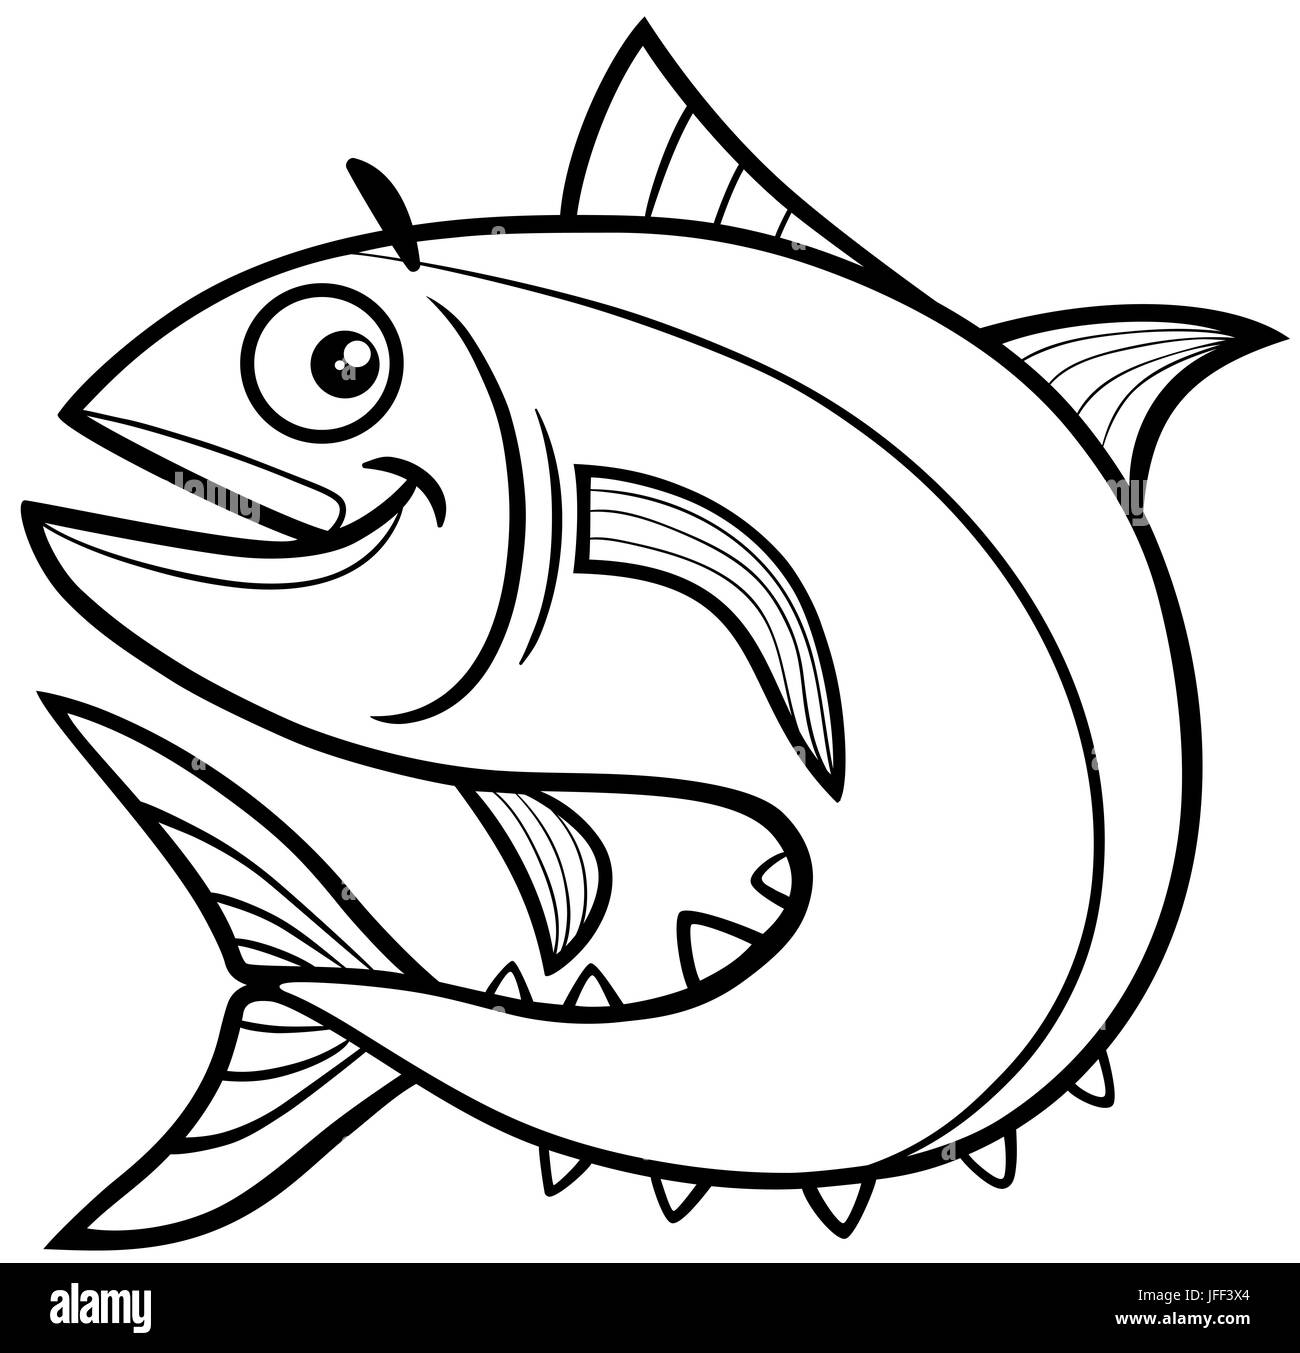 tuna fish coloring page Stock Photo - Alamy